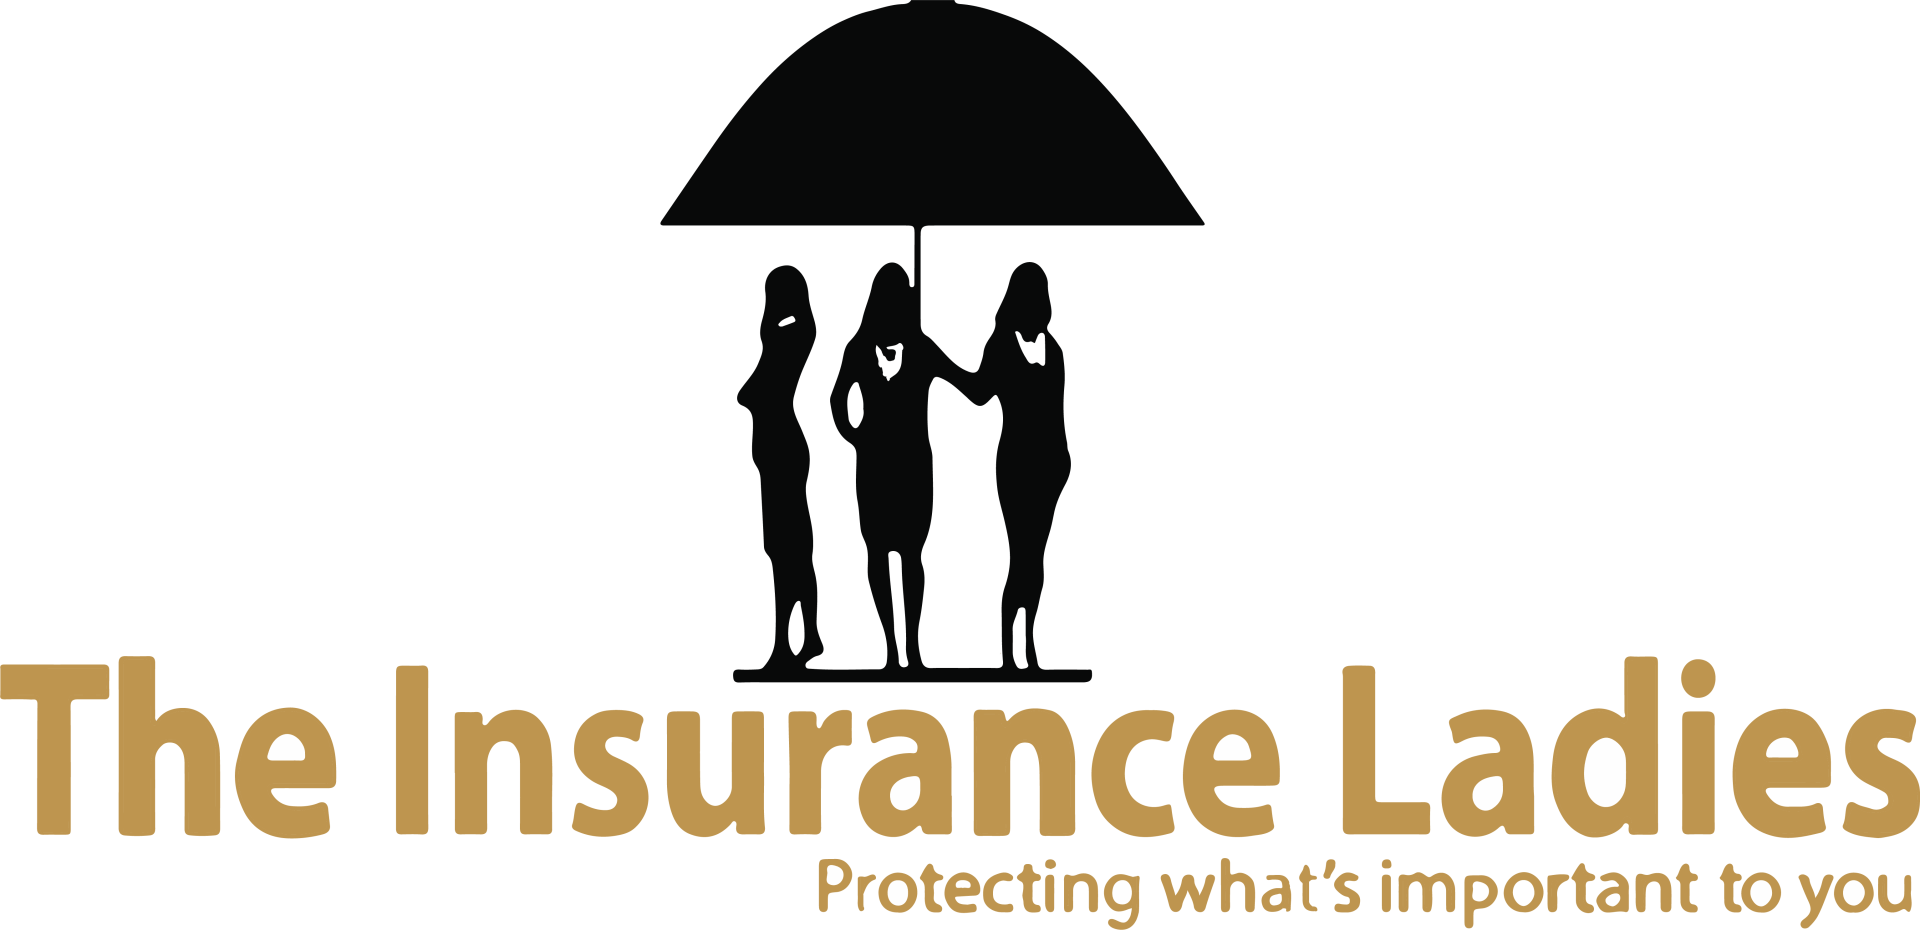 The Insurance Ladies Financial Advisor